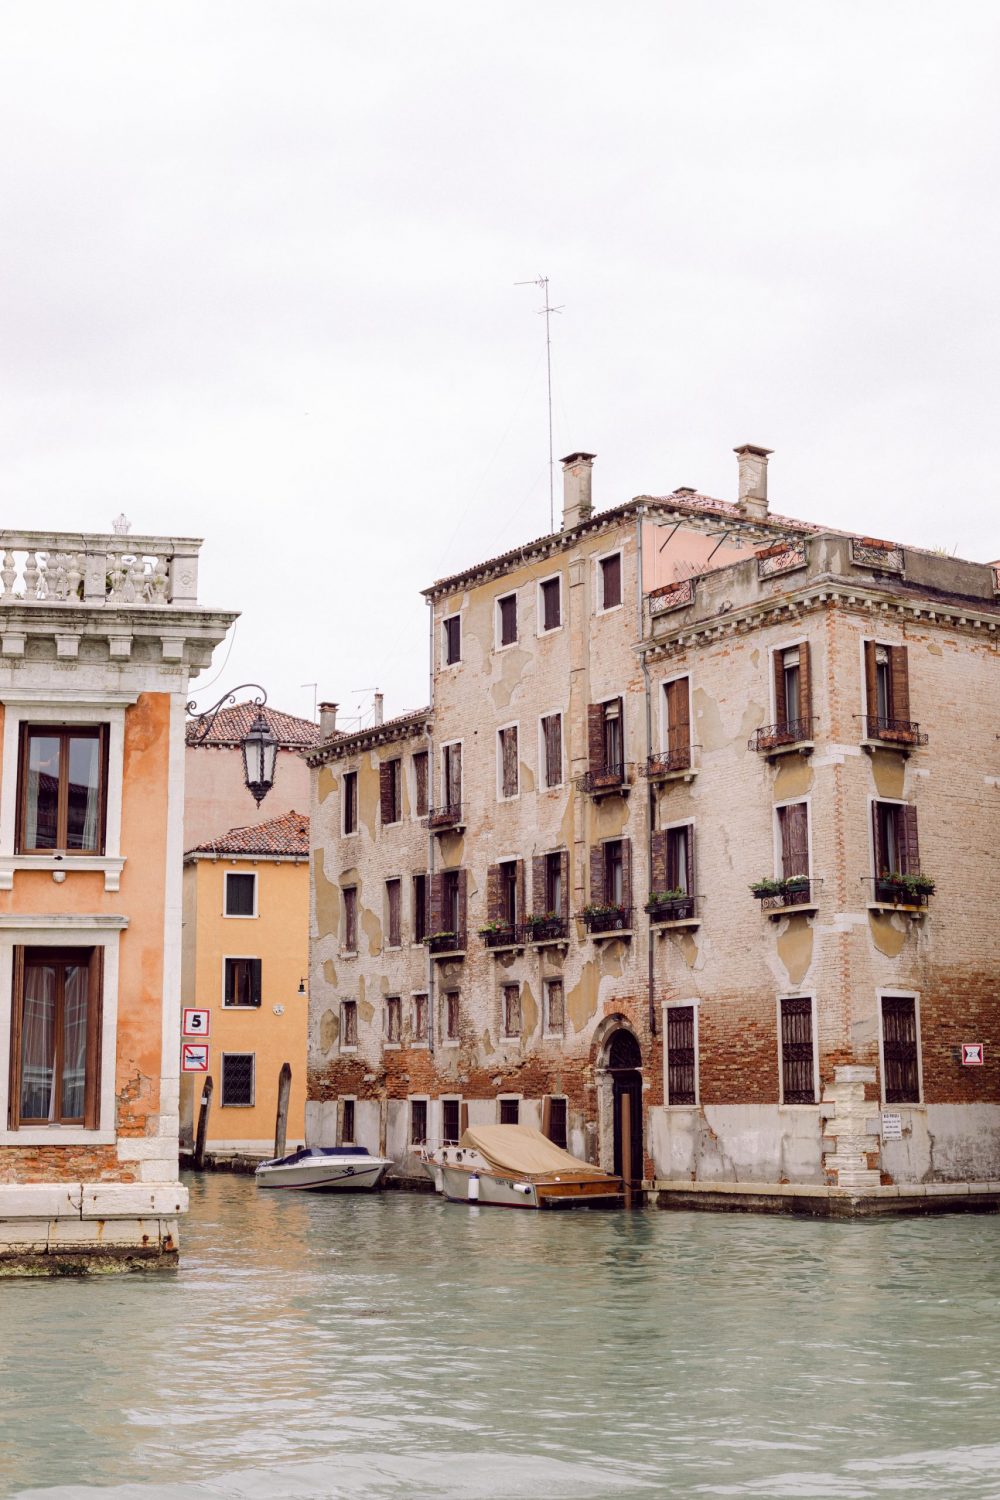 Rainy day of spring in Venice | Honeymoon Photographer in Italy